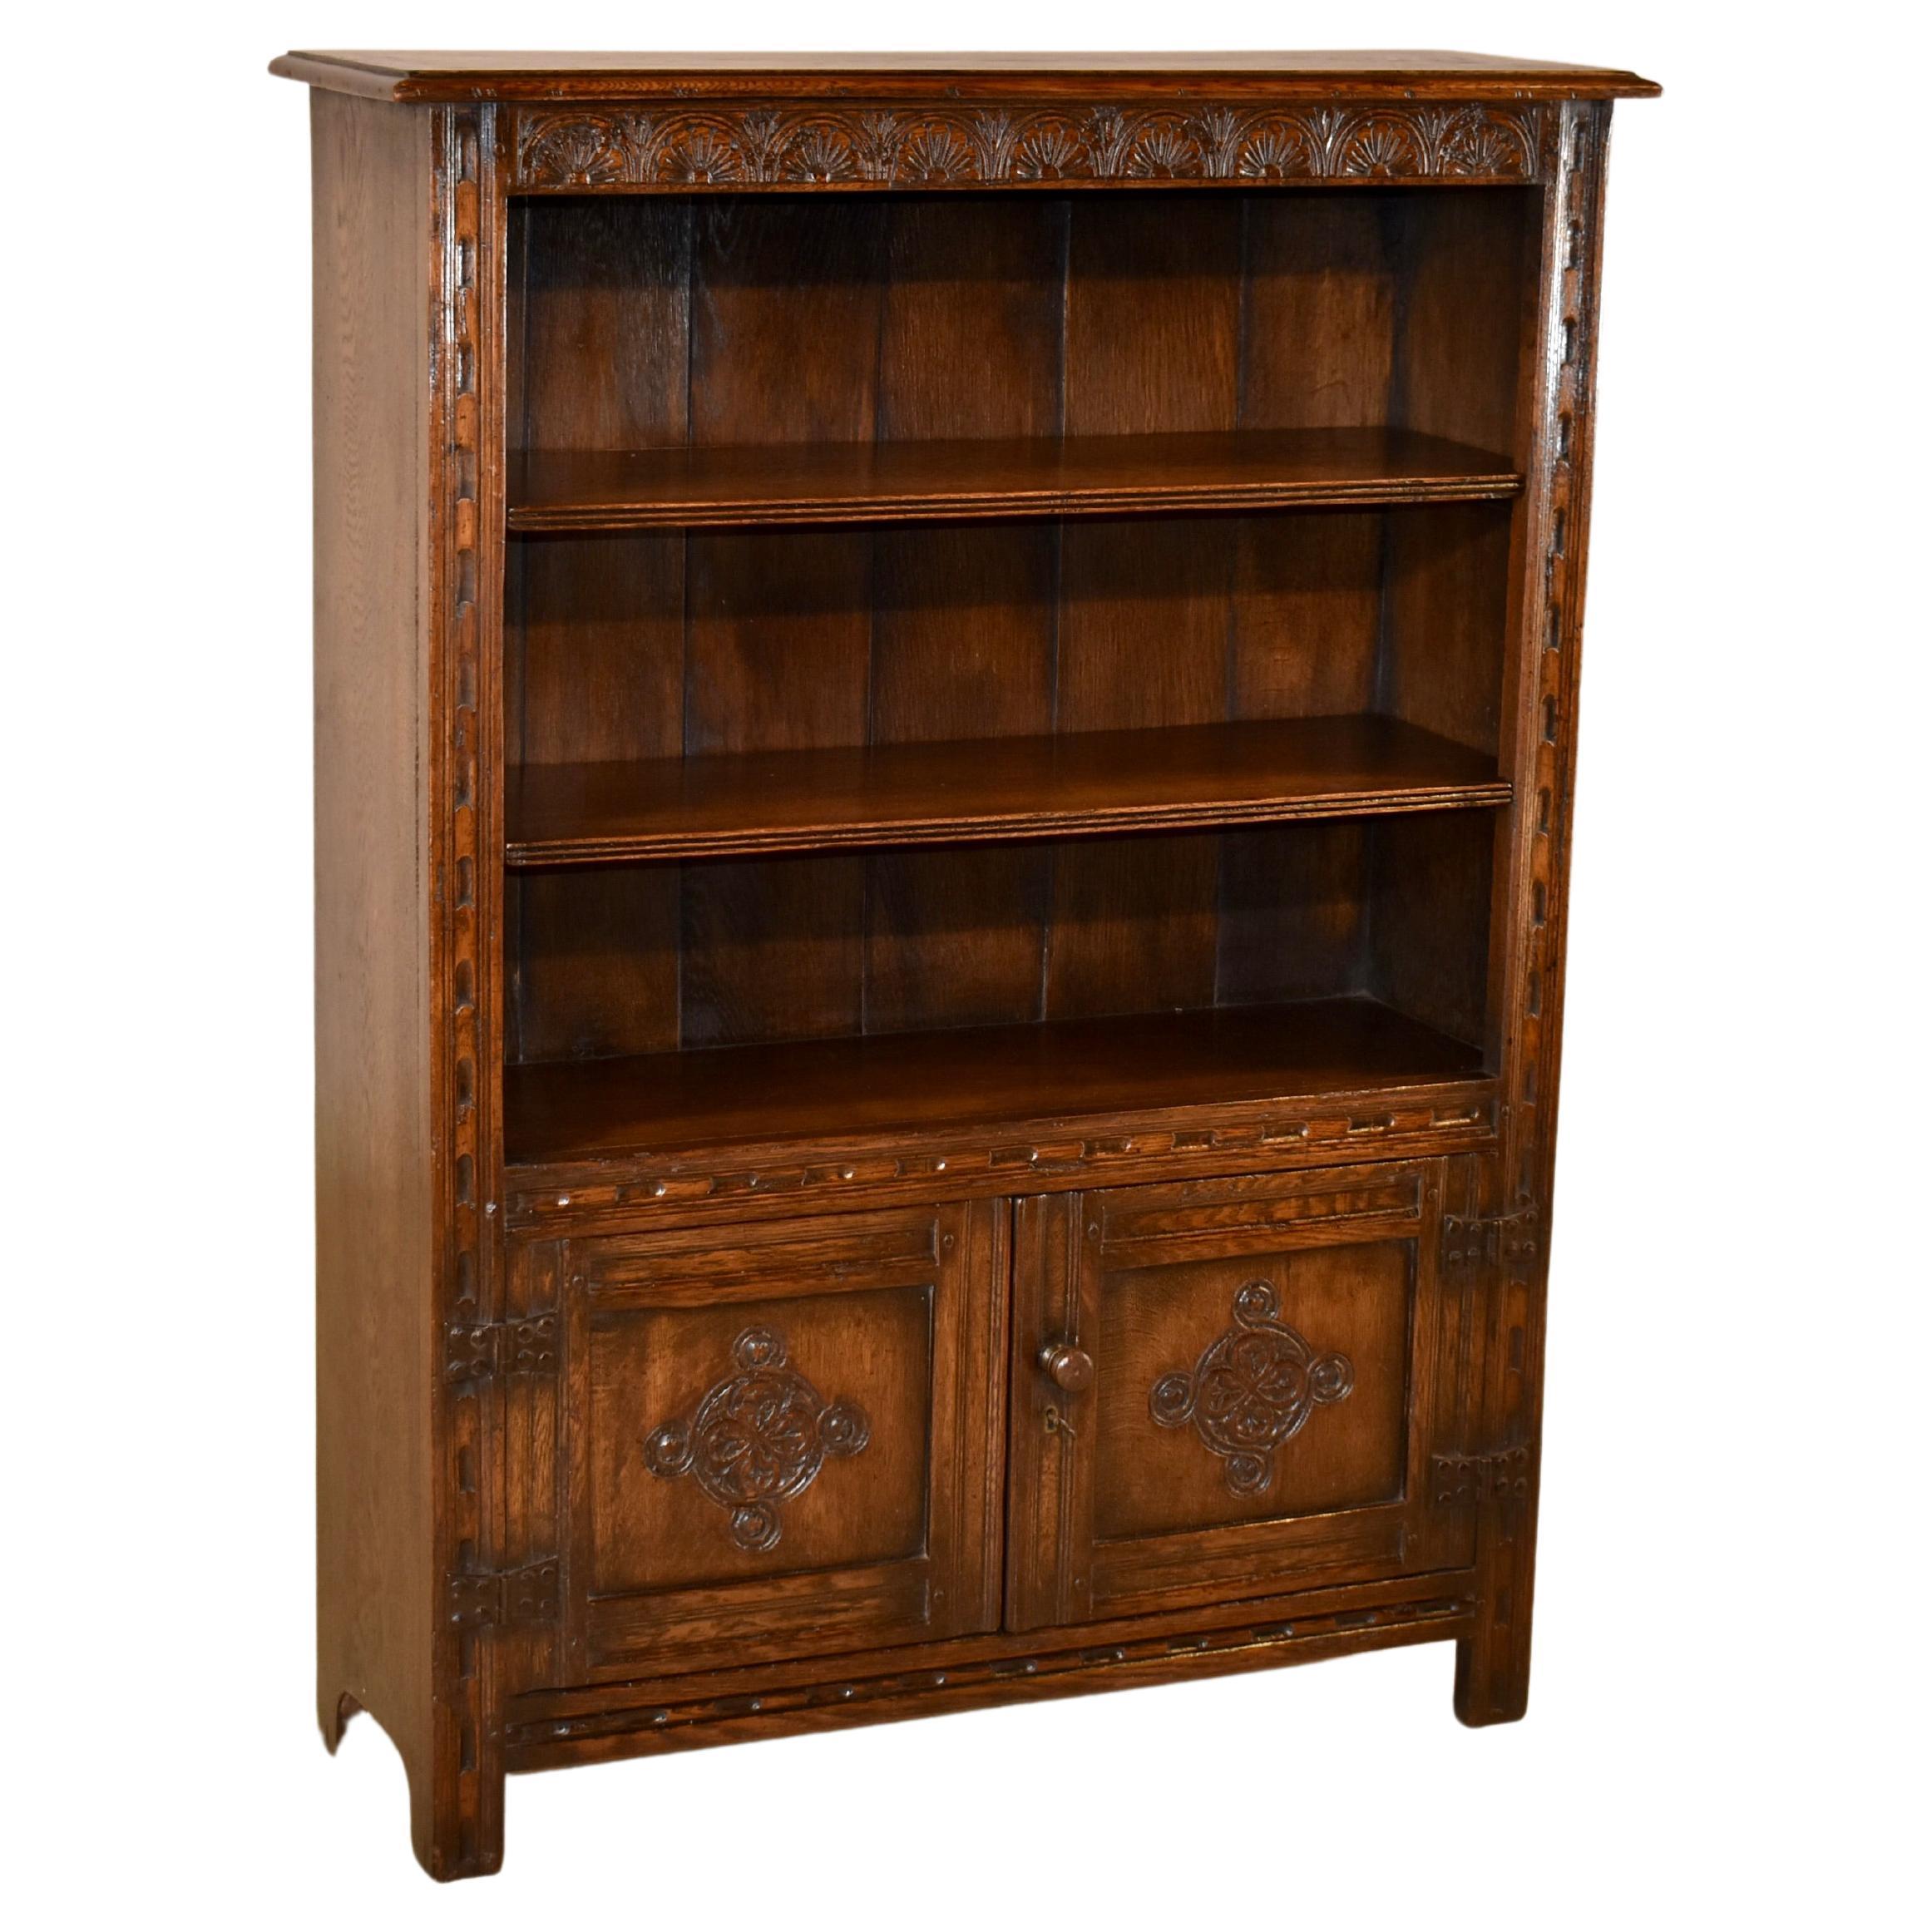 C. 1900 English Oak Bookcase